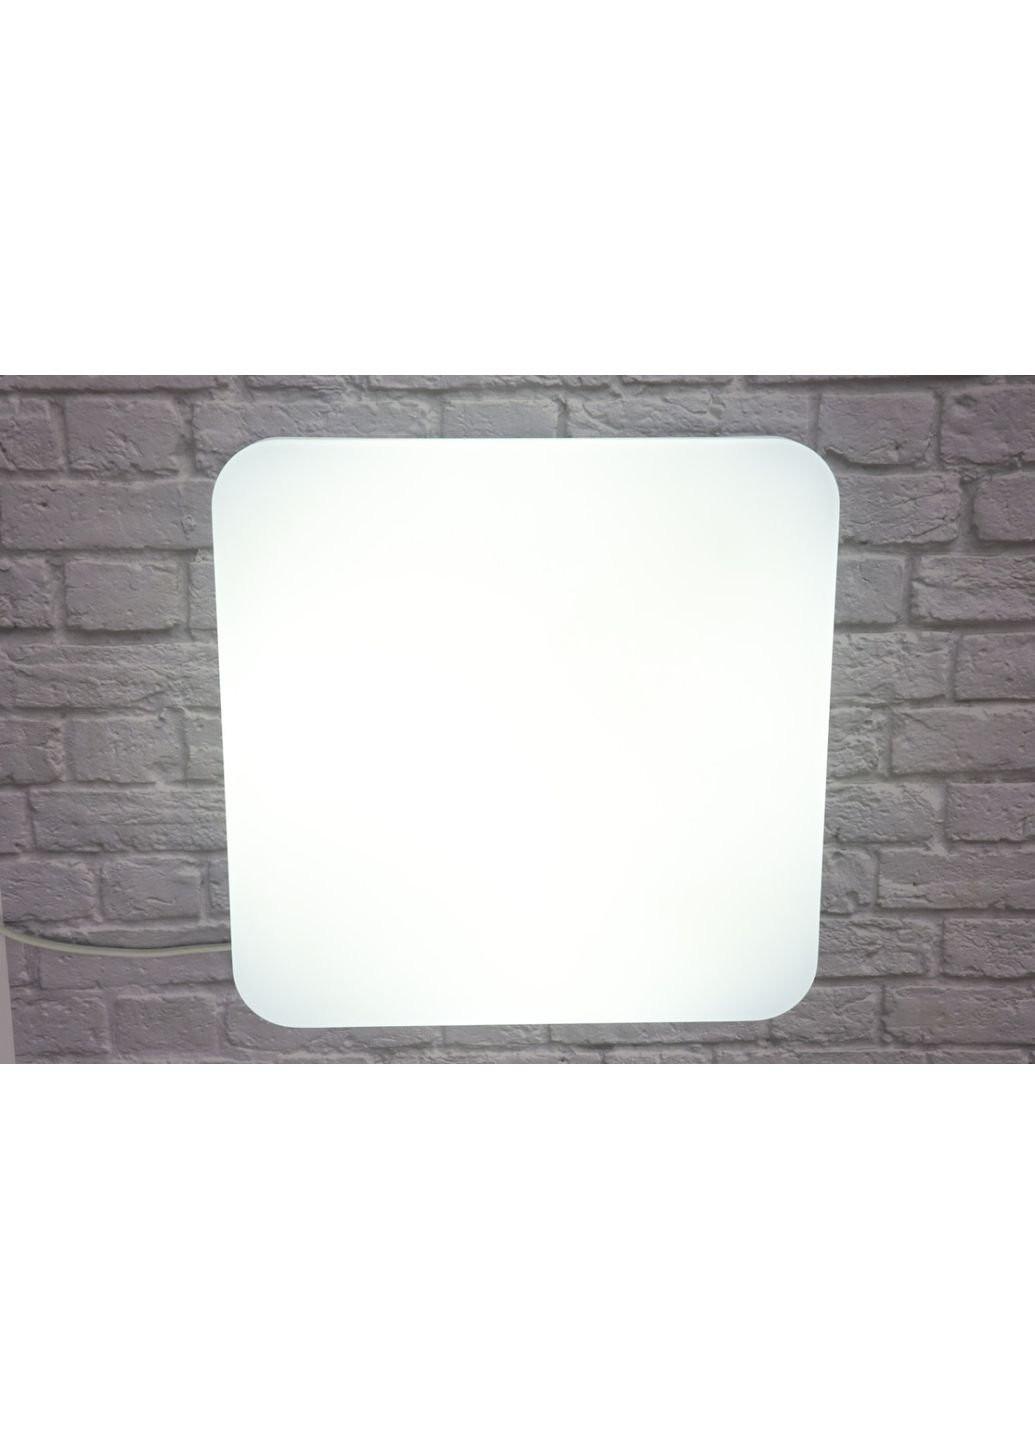 Светильник потолочный LED с пультом W8342/400-sq Белый 4х38х38 см. Sunnysky (253542426)